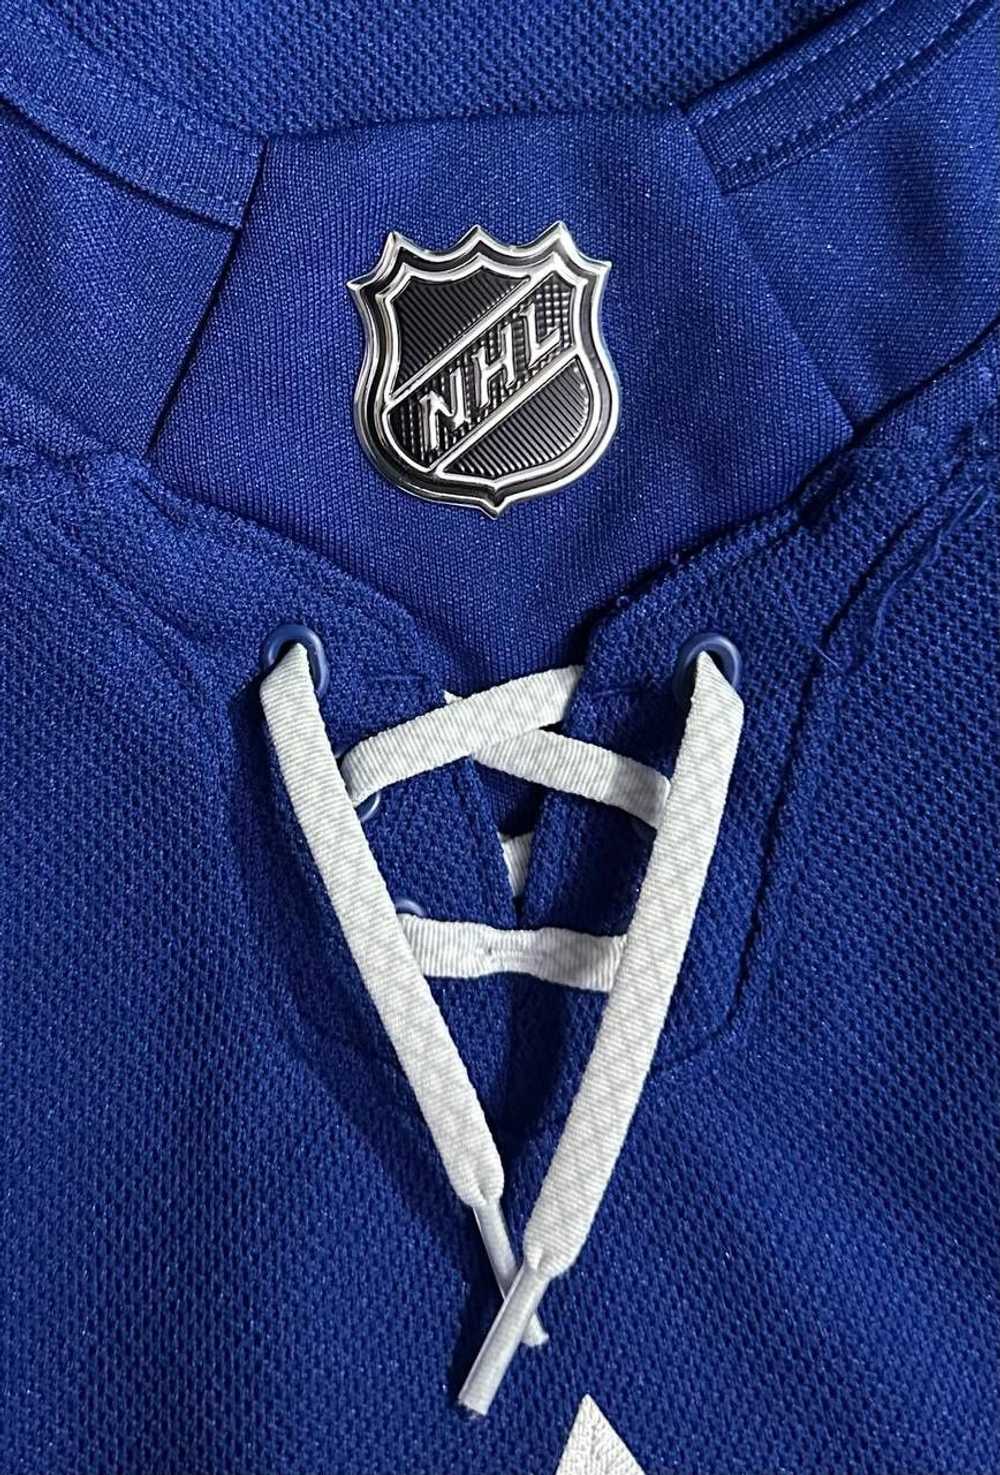 Adidas × Hockey × NHL Toronto Maple Leafs adidas … - image 3